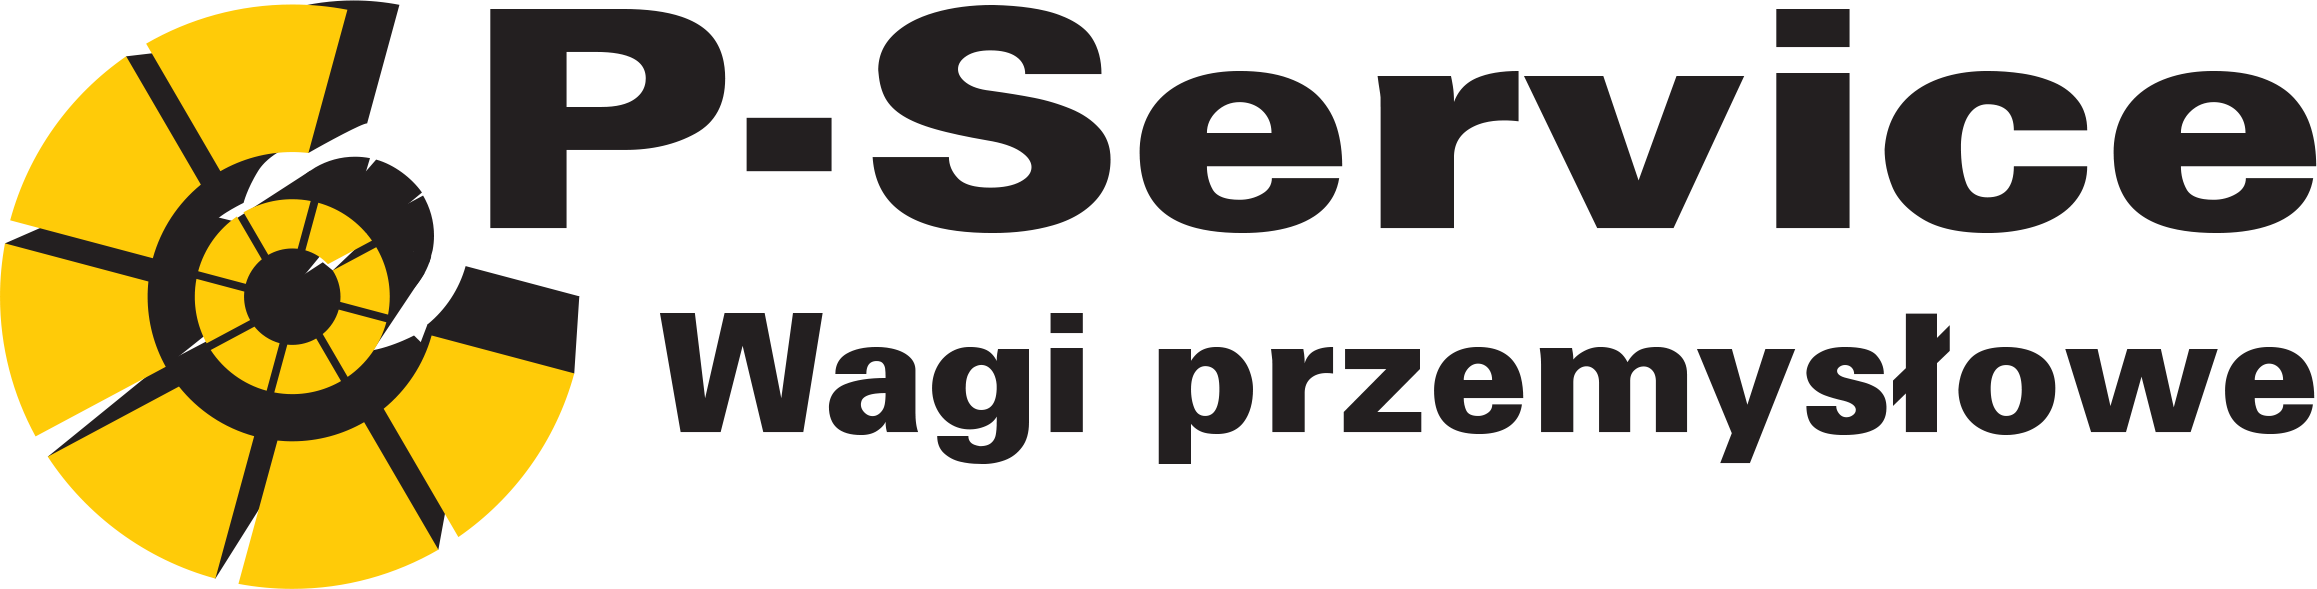 P-Service logo